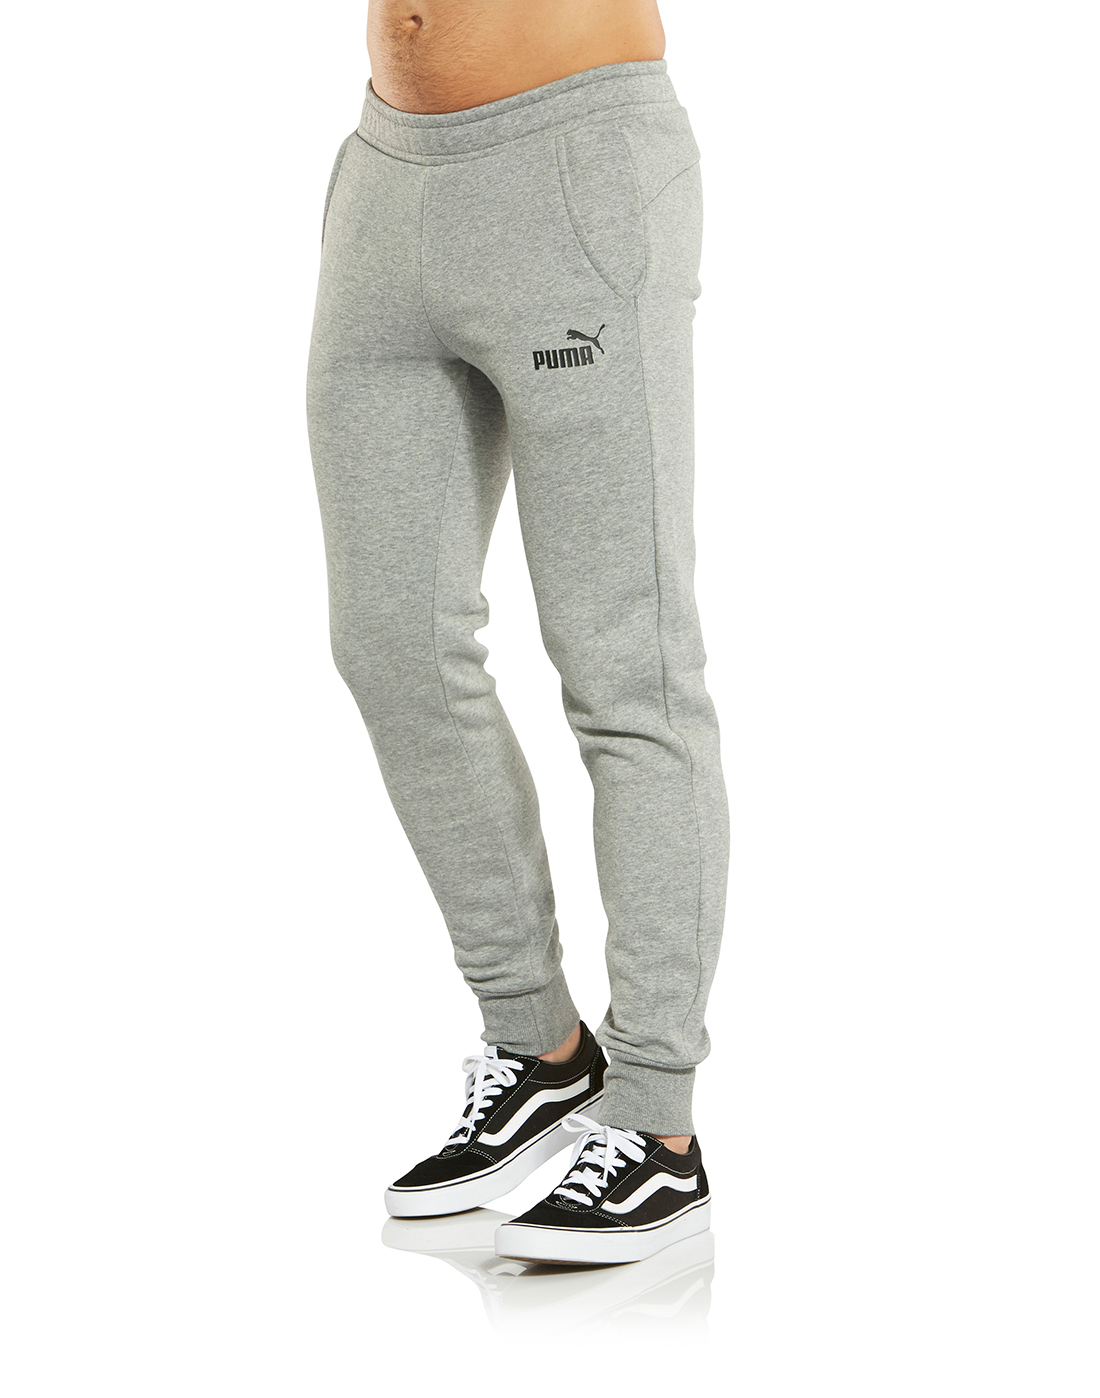 Men's Grey Puma Sweatpants | Life Style 